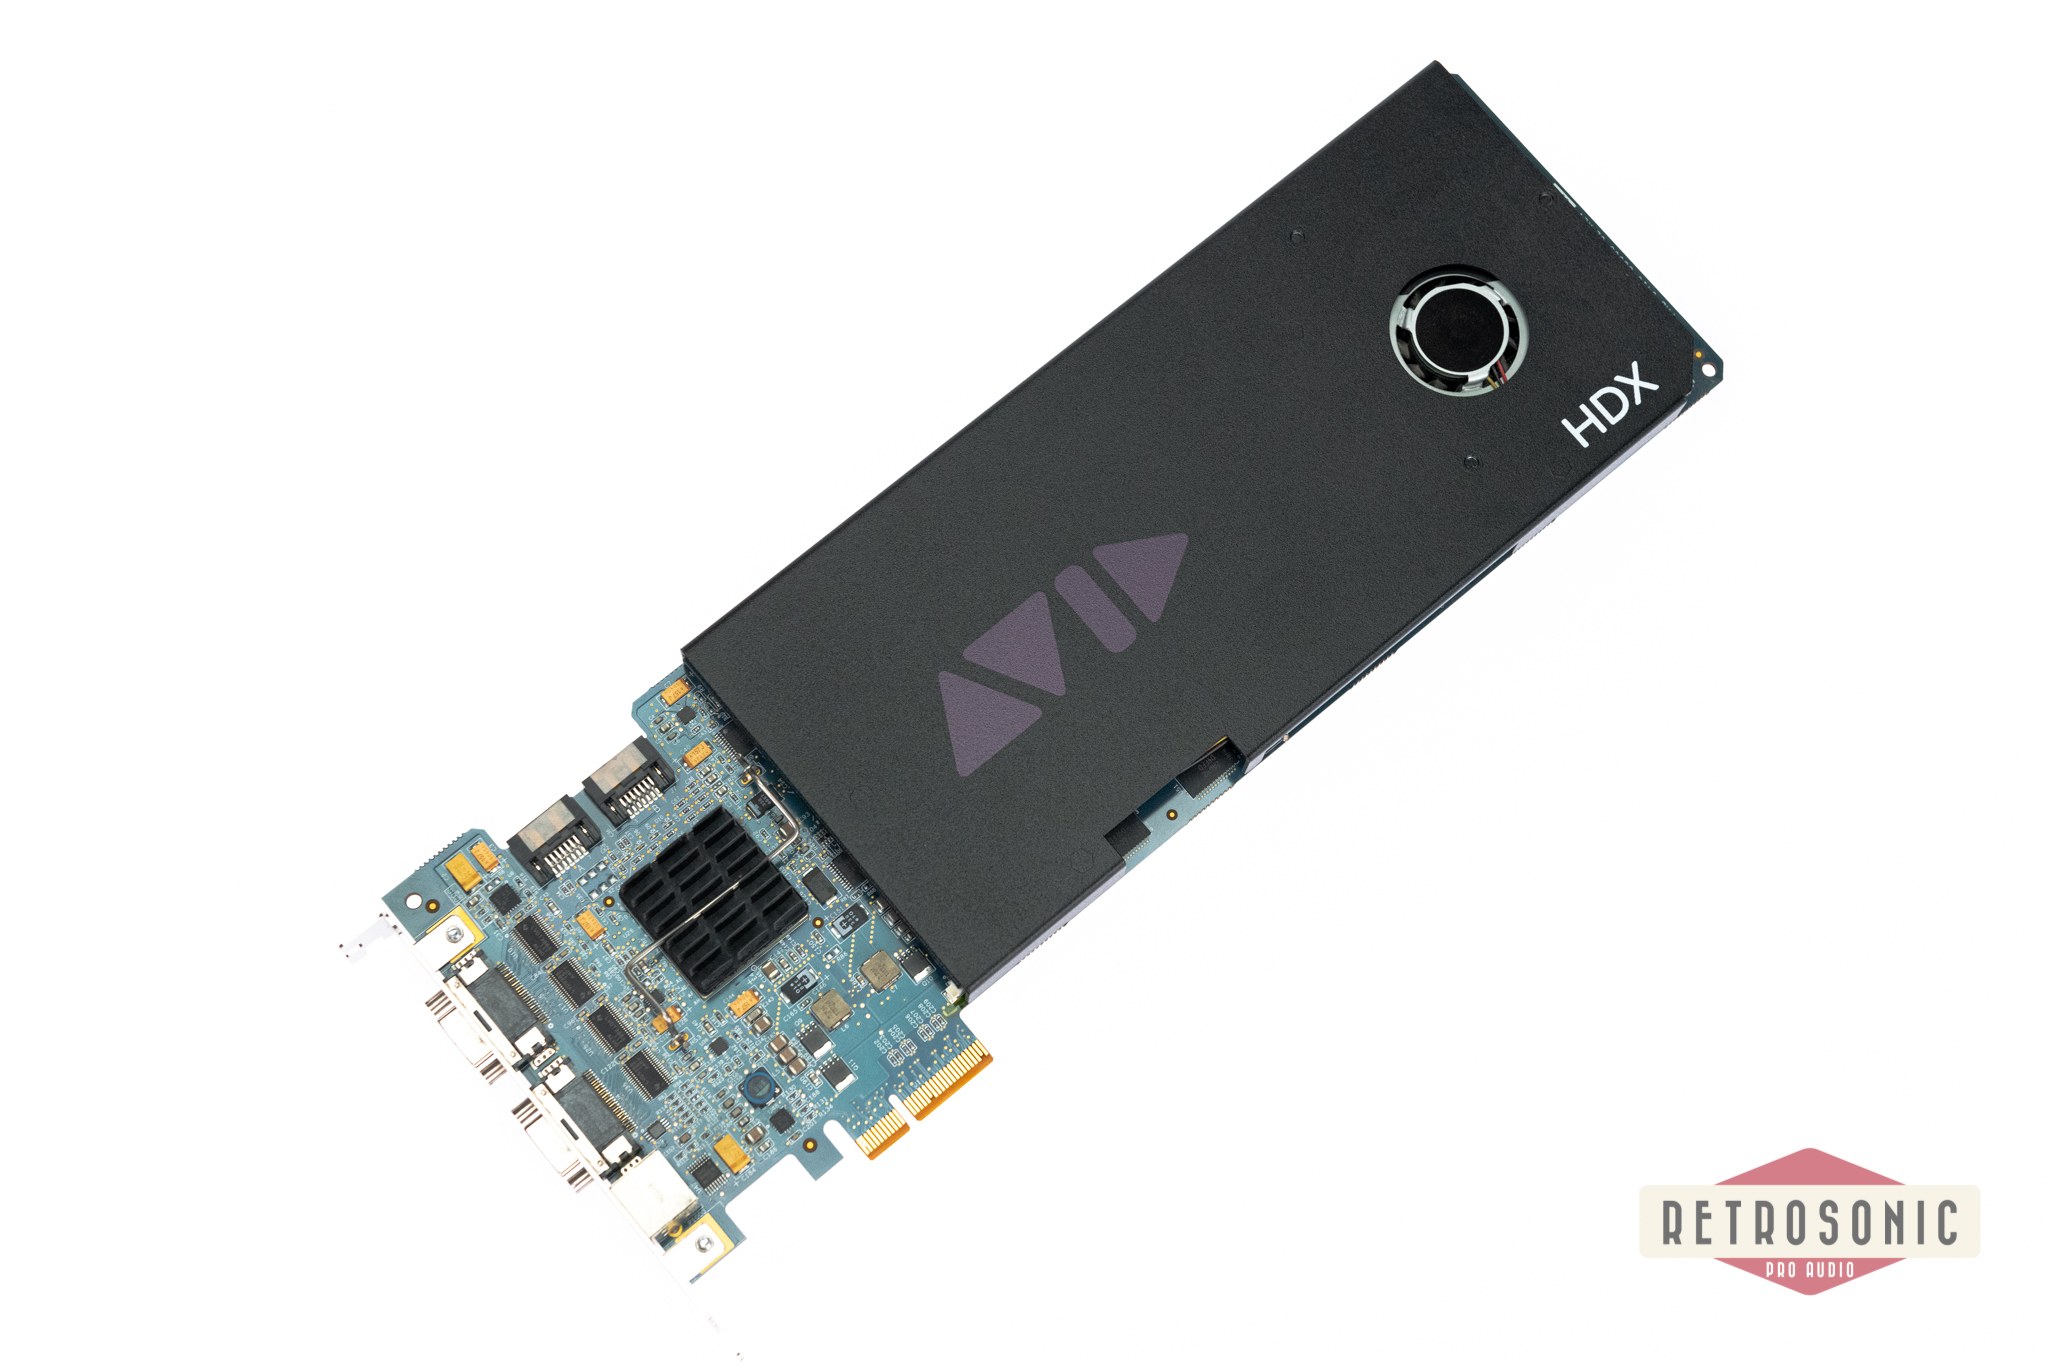 Avid Pro Tools HDX PCIe Card#3